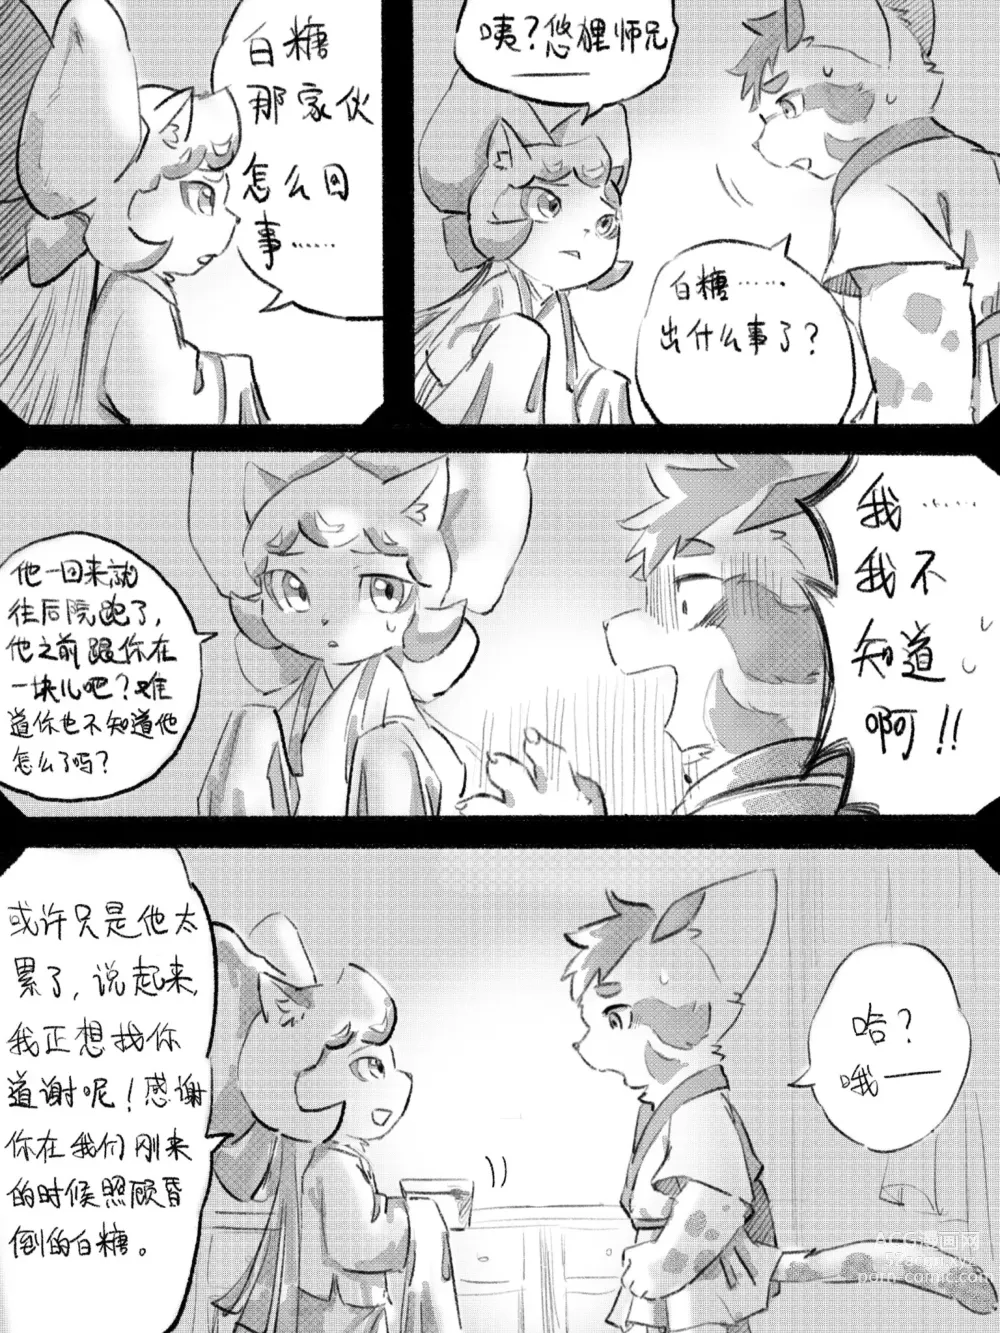 Page 16 of doujinshi 京剧猫同人本悠狸×白糖